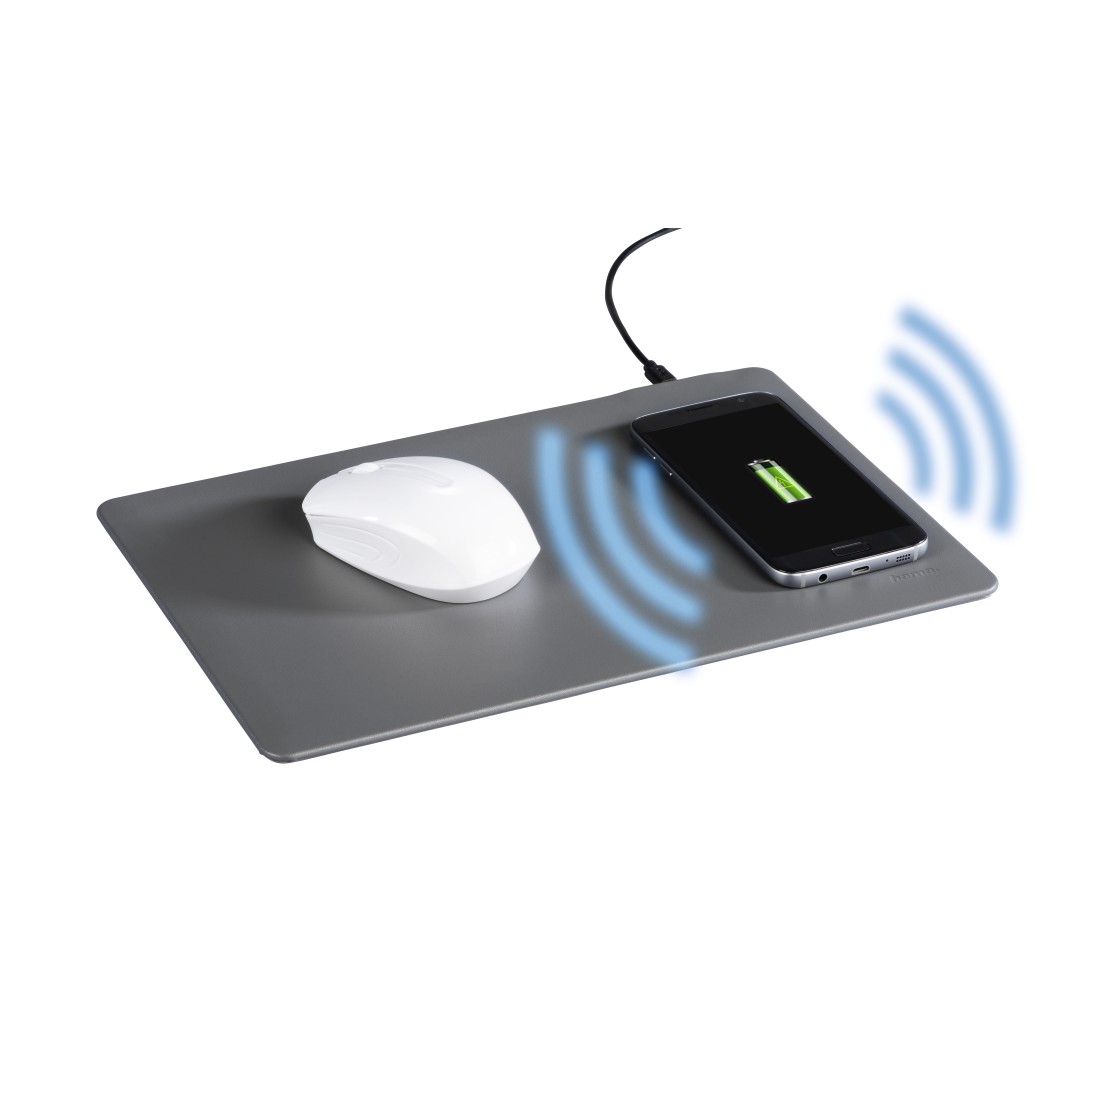 Hama "Wireless Charging" Mouse Pad